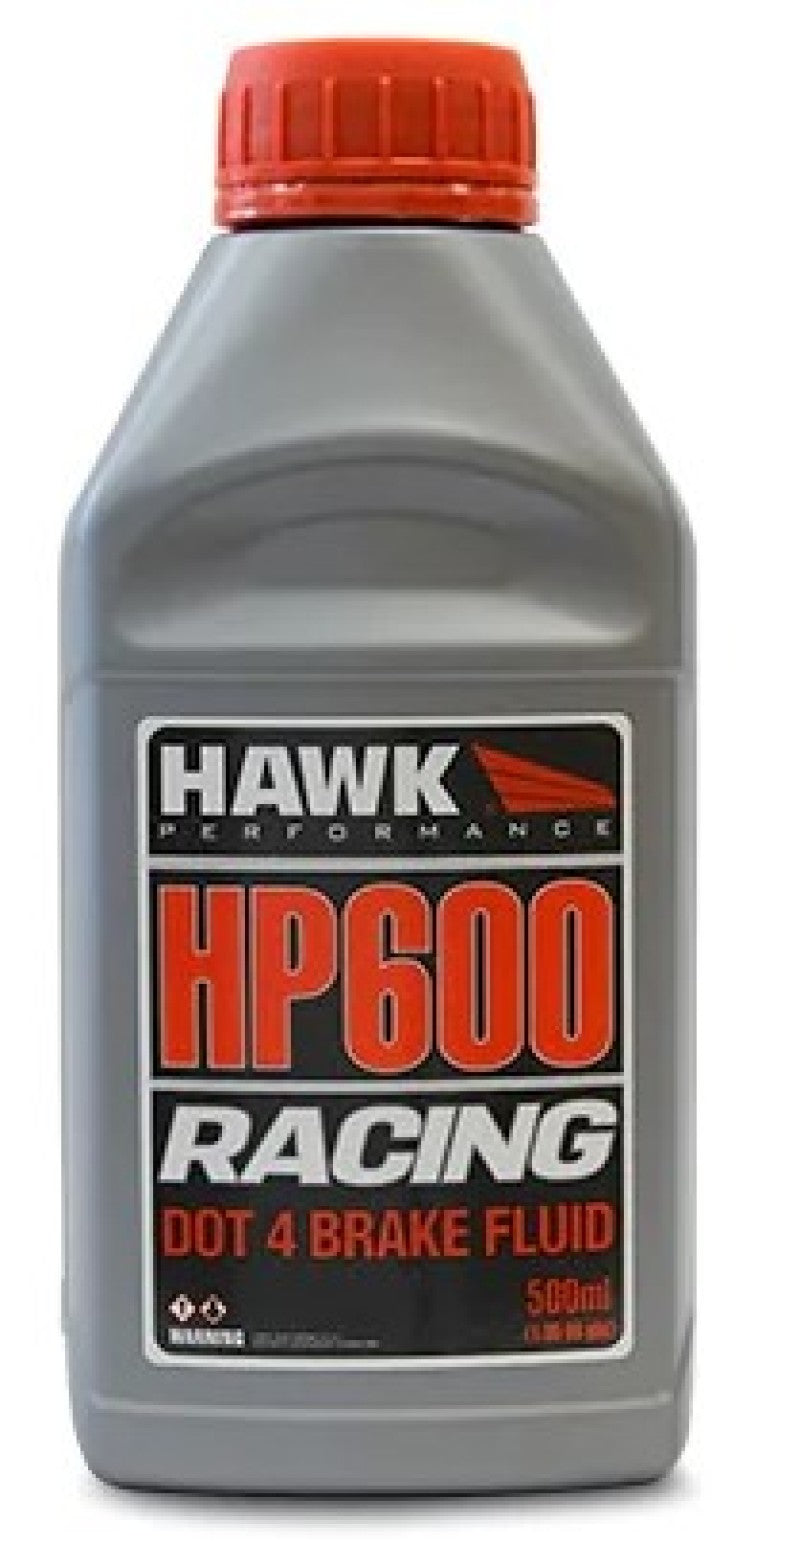 Hawk Performance Street DOT 4 Brake Fluid - 500ml Bottle -  Shop now at Performance Car Parts